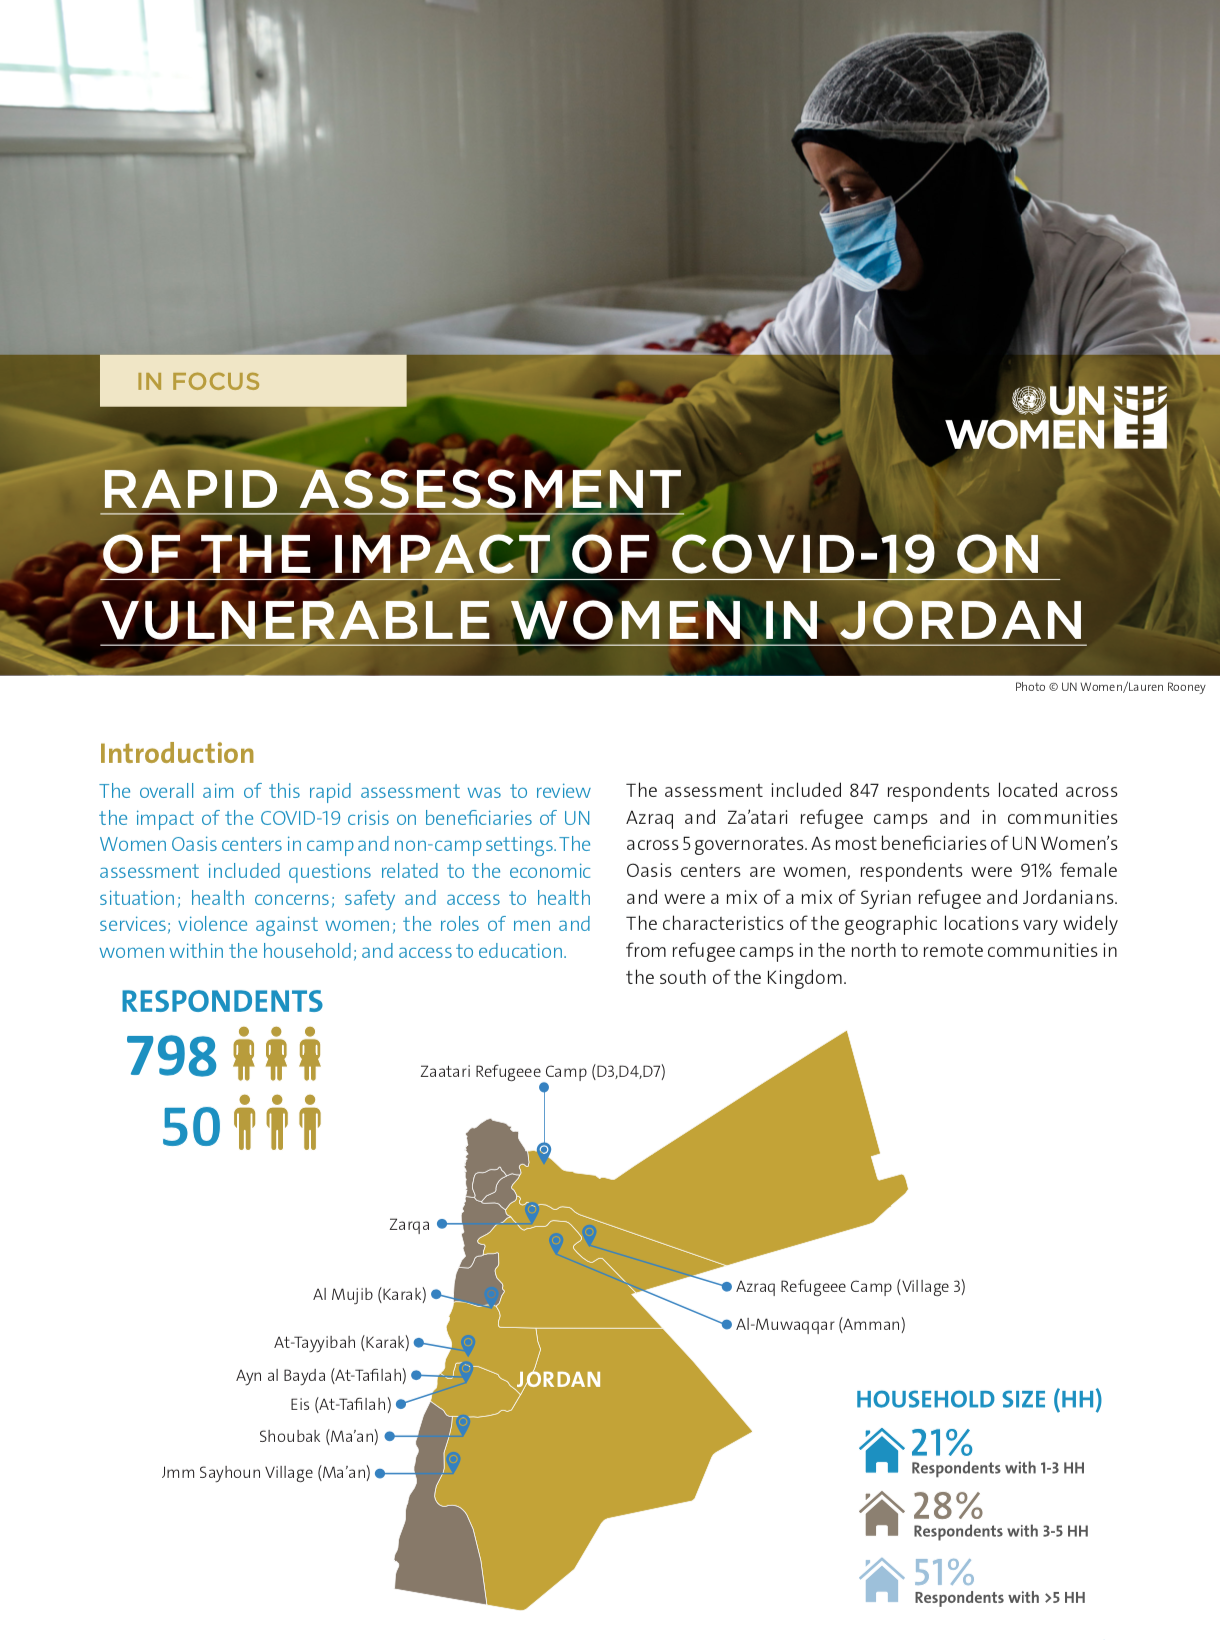 RAPID ASSESSMENT OF THE IMPACT OF COVID-19 ON VULNERABLE WOMEN IN JORDAN/ UN Women